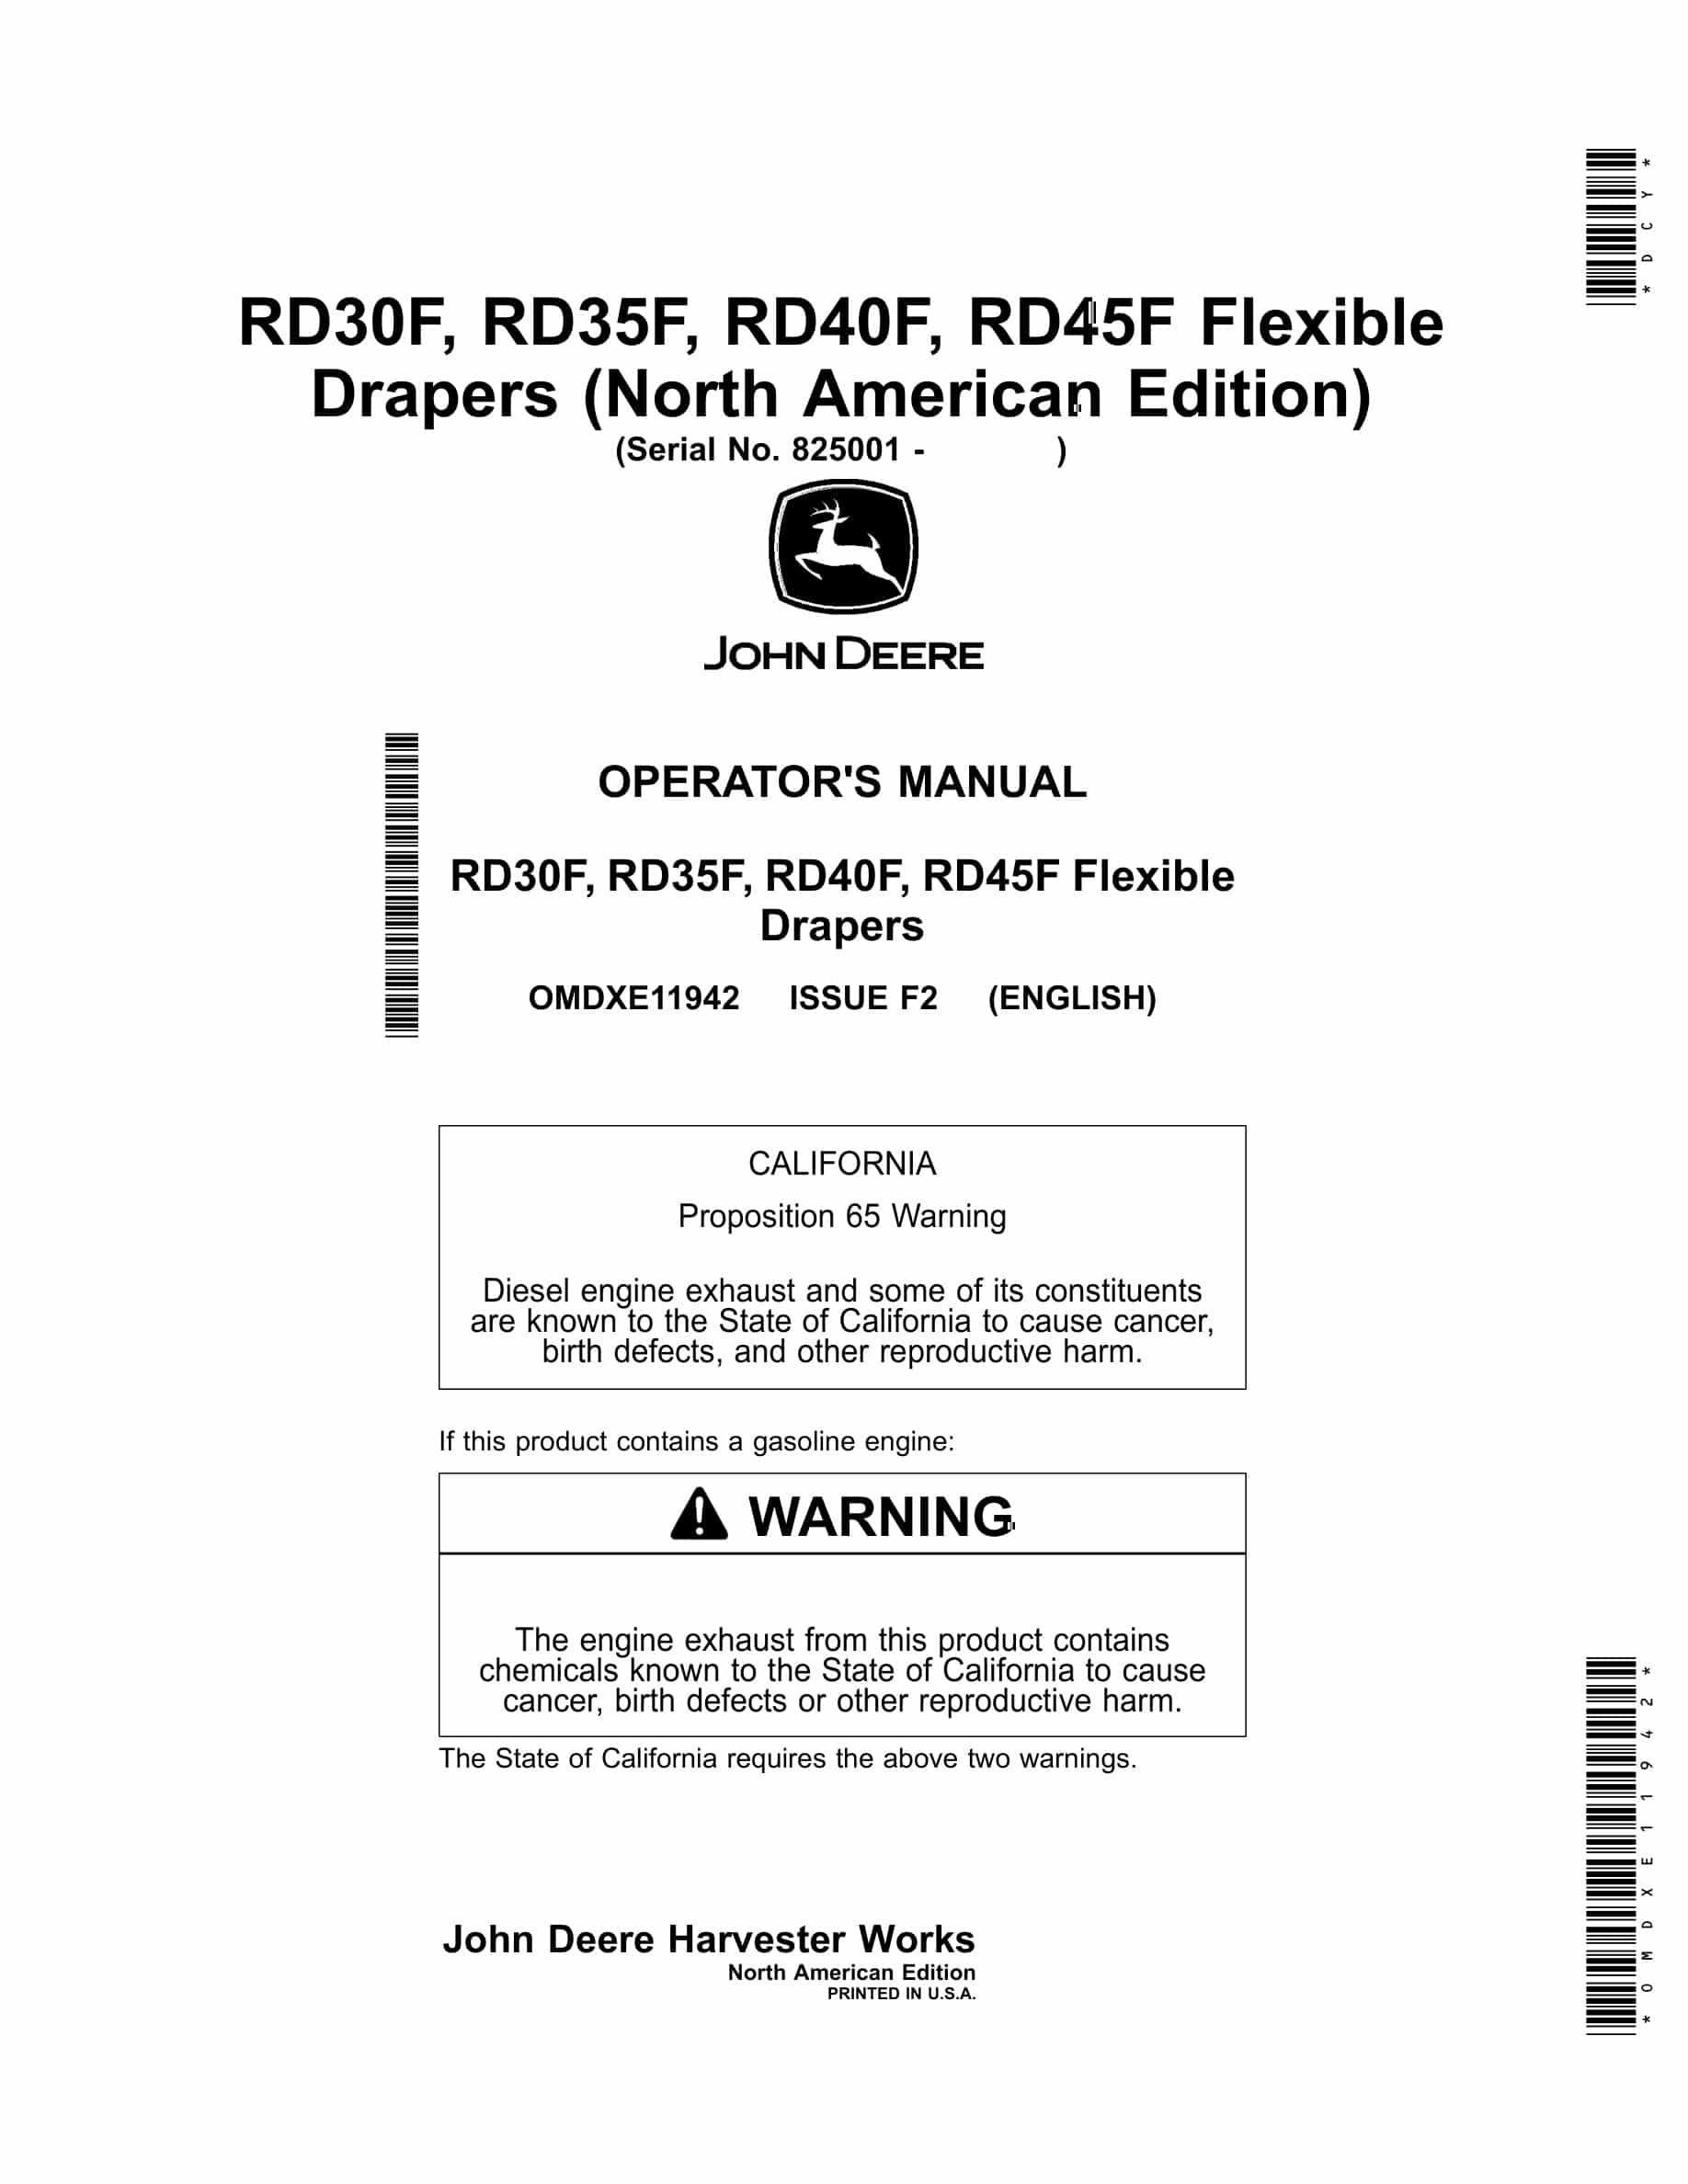 John Deere RD30F, RD35F, RD40F, RD45F Flexible Drapers Operator Manual OMDXE11942-1